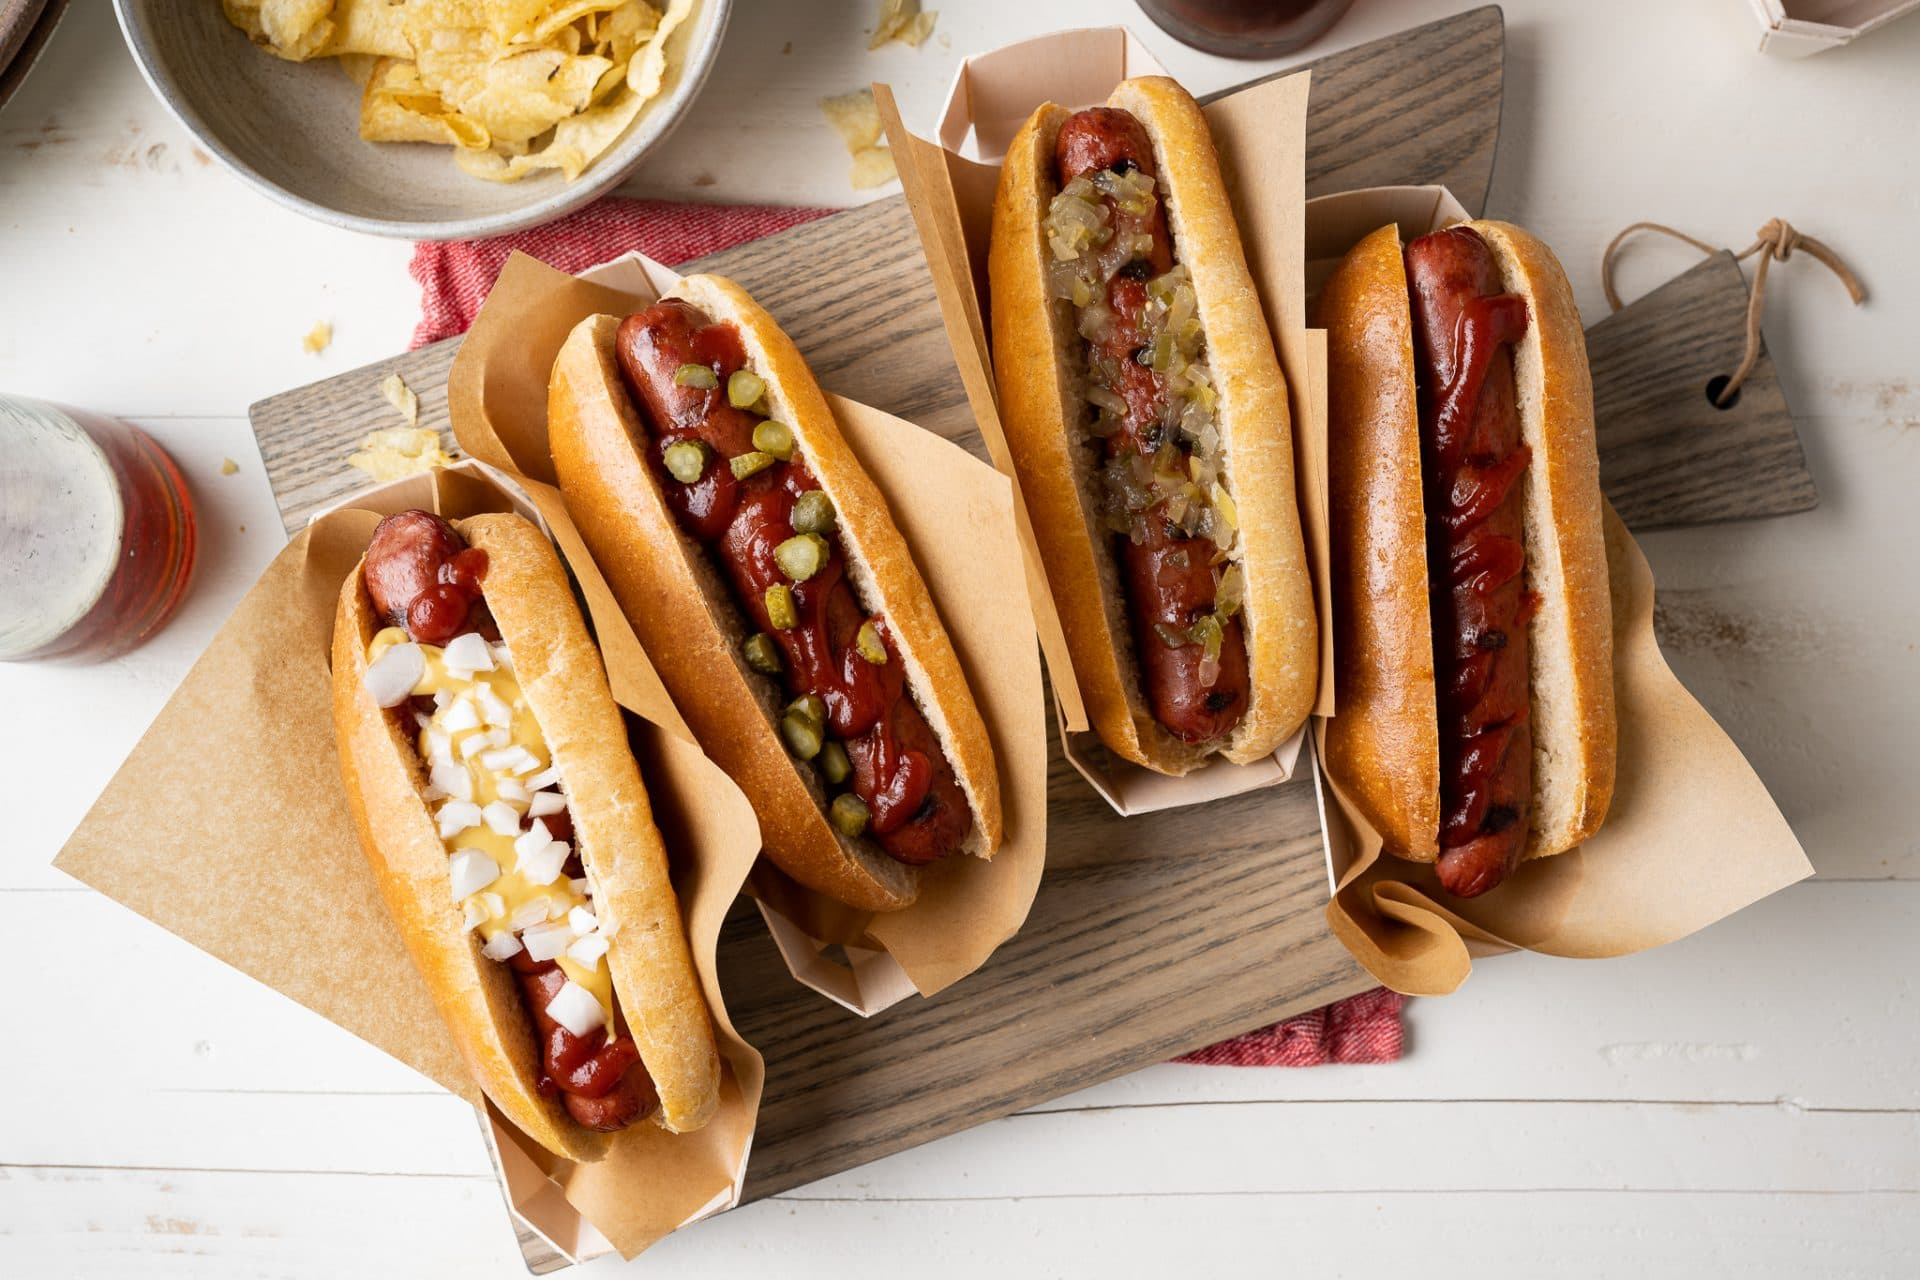 https://www.theperfectloaf.com/wp-content/uploads/2021/06/theperfectloaf-homemade-hot-dog-buns-11-1920x1280.jpg